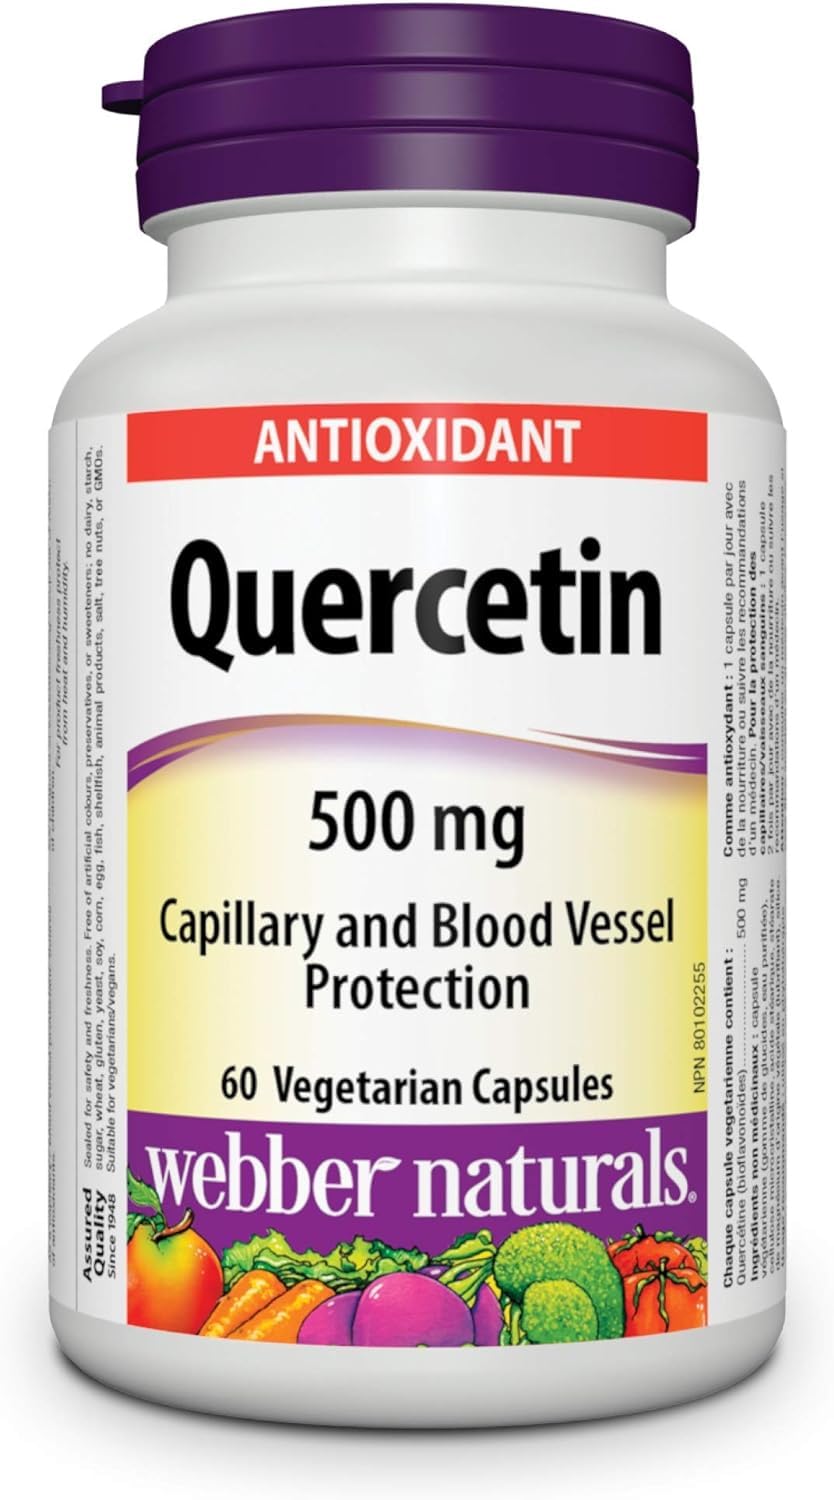 Webber Naturals Quercetin 500 mg, 60 Capsules, Antioxidant Support, Vegan